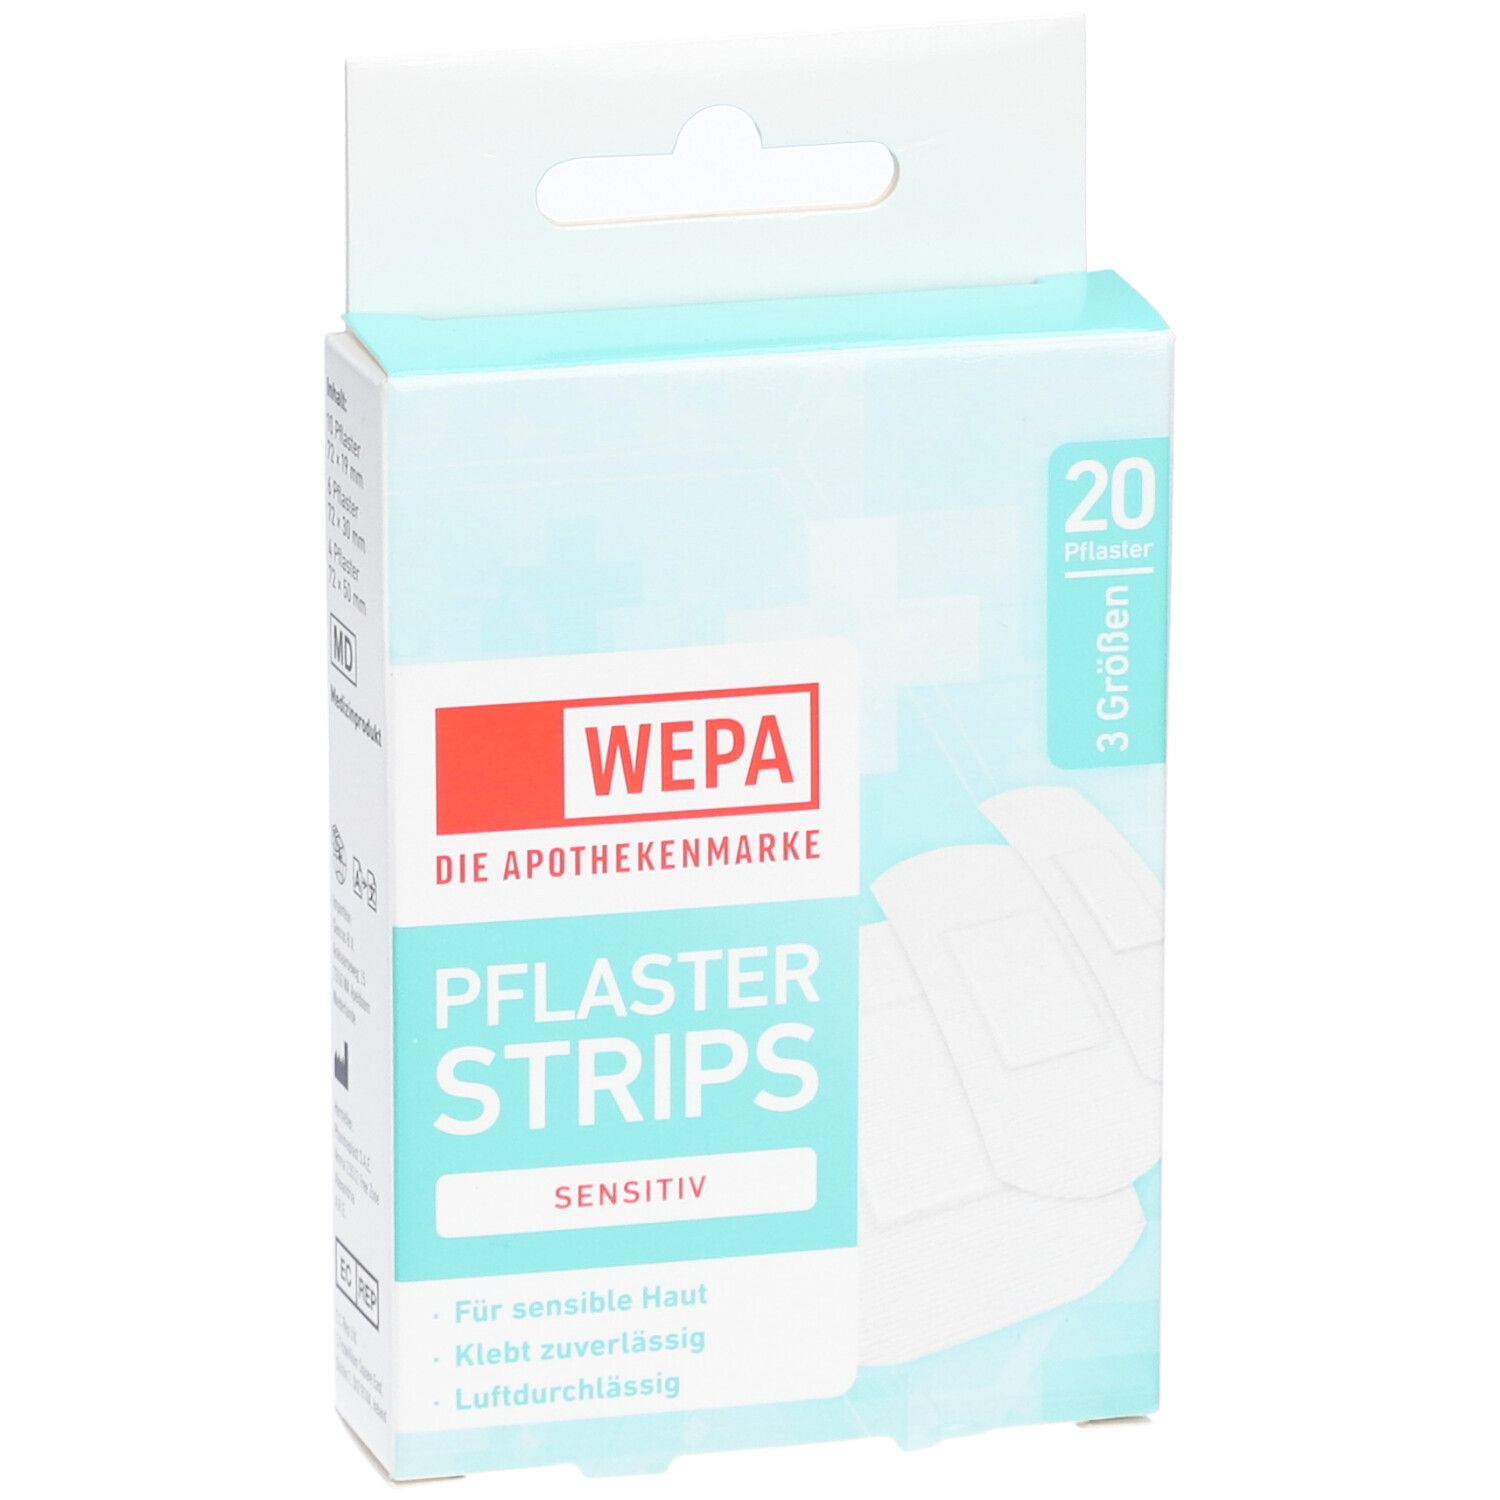 WEPA Pflaster Strips sensitiv 3 Größen